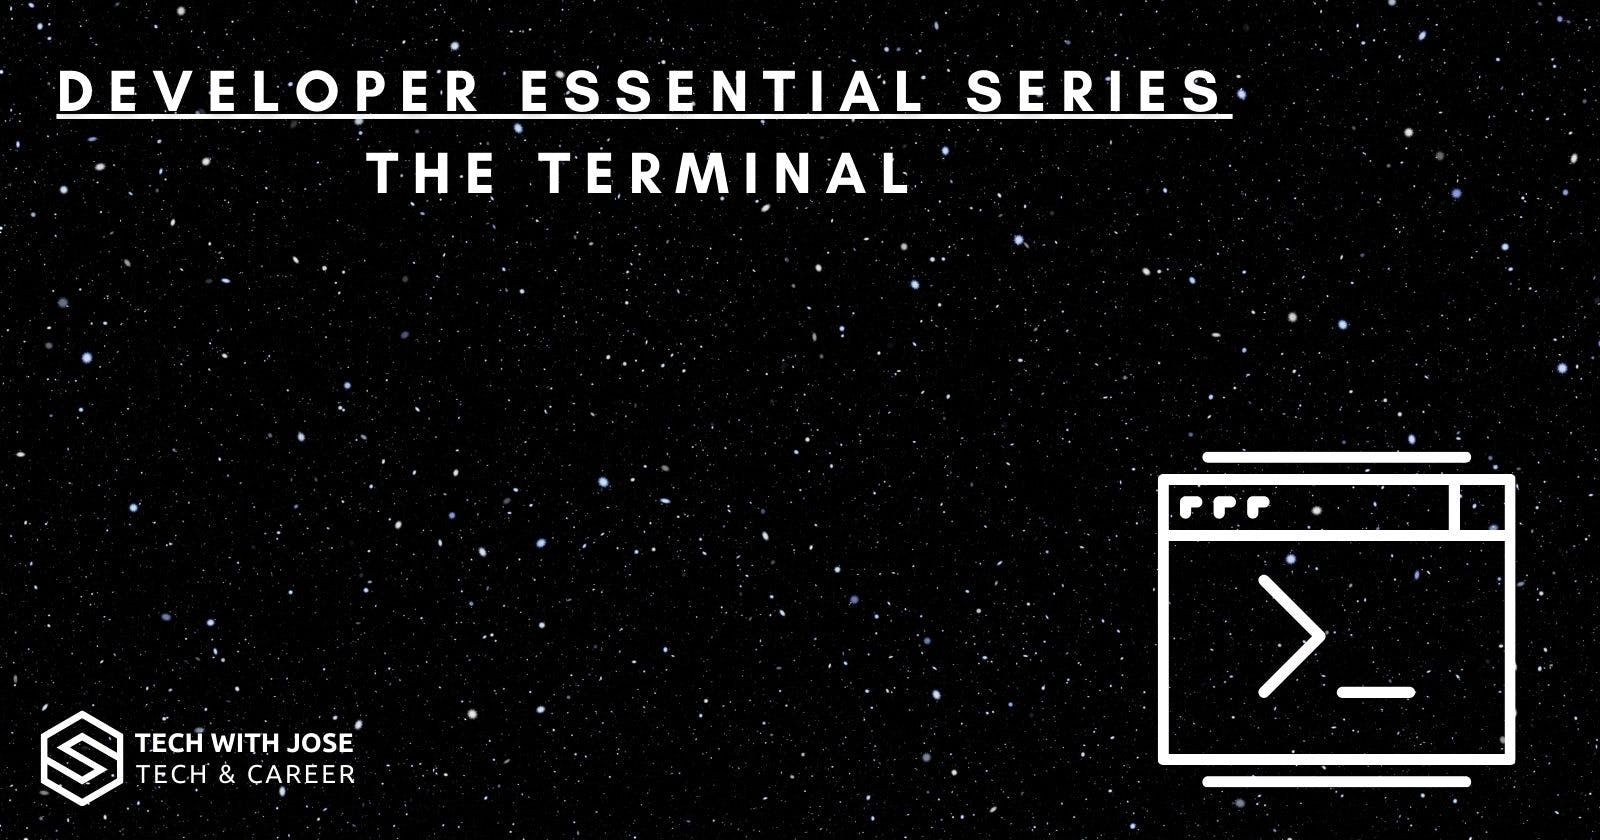 Developer Essential Series:
The Terminal